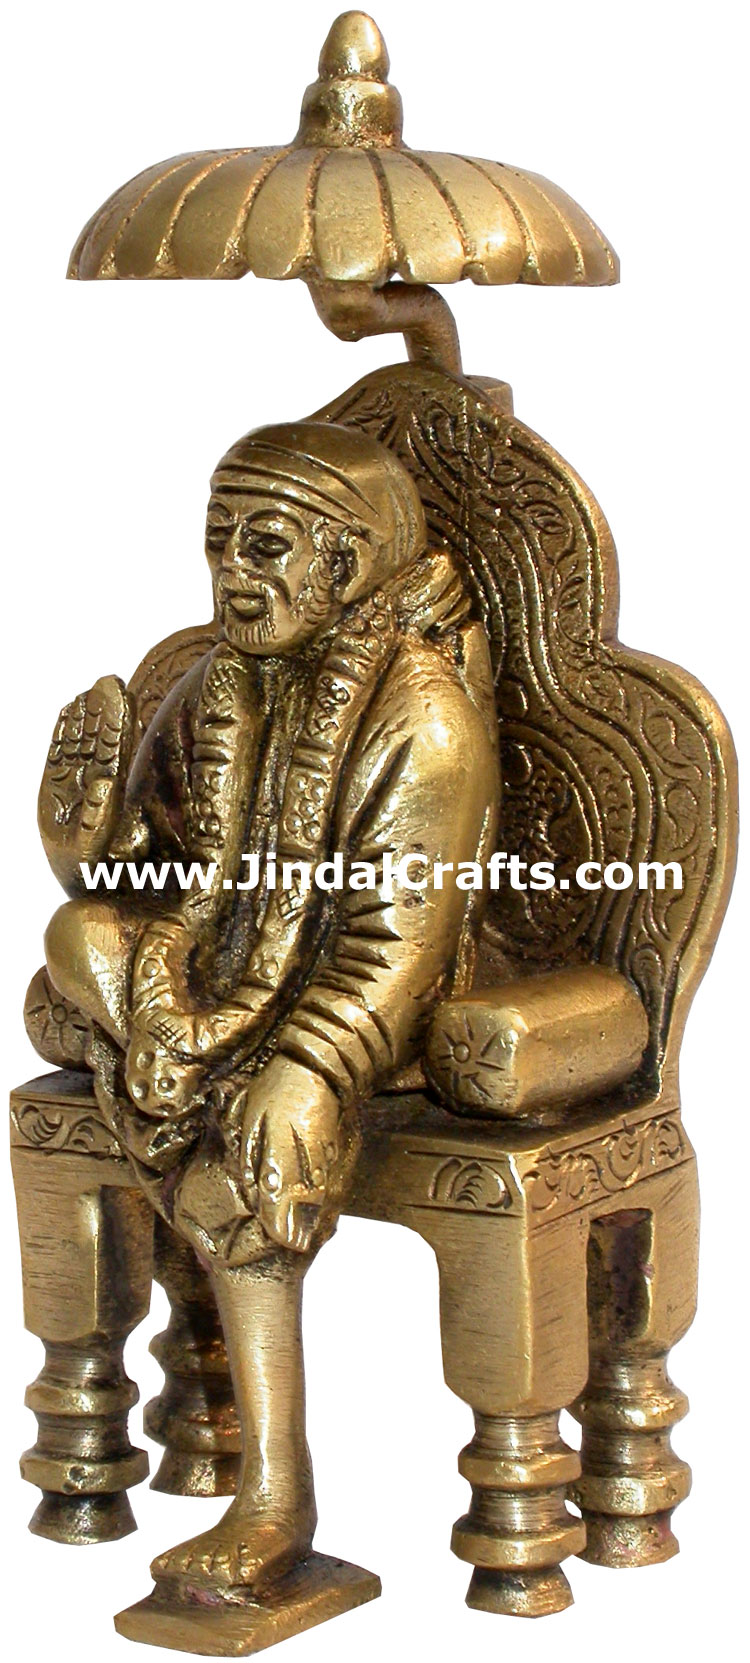 Shirdi Sai Baba Hindu God Handicraft Crafts Arts India Religious Idol Sculptures